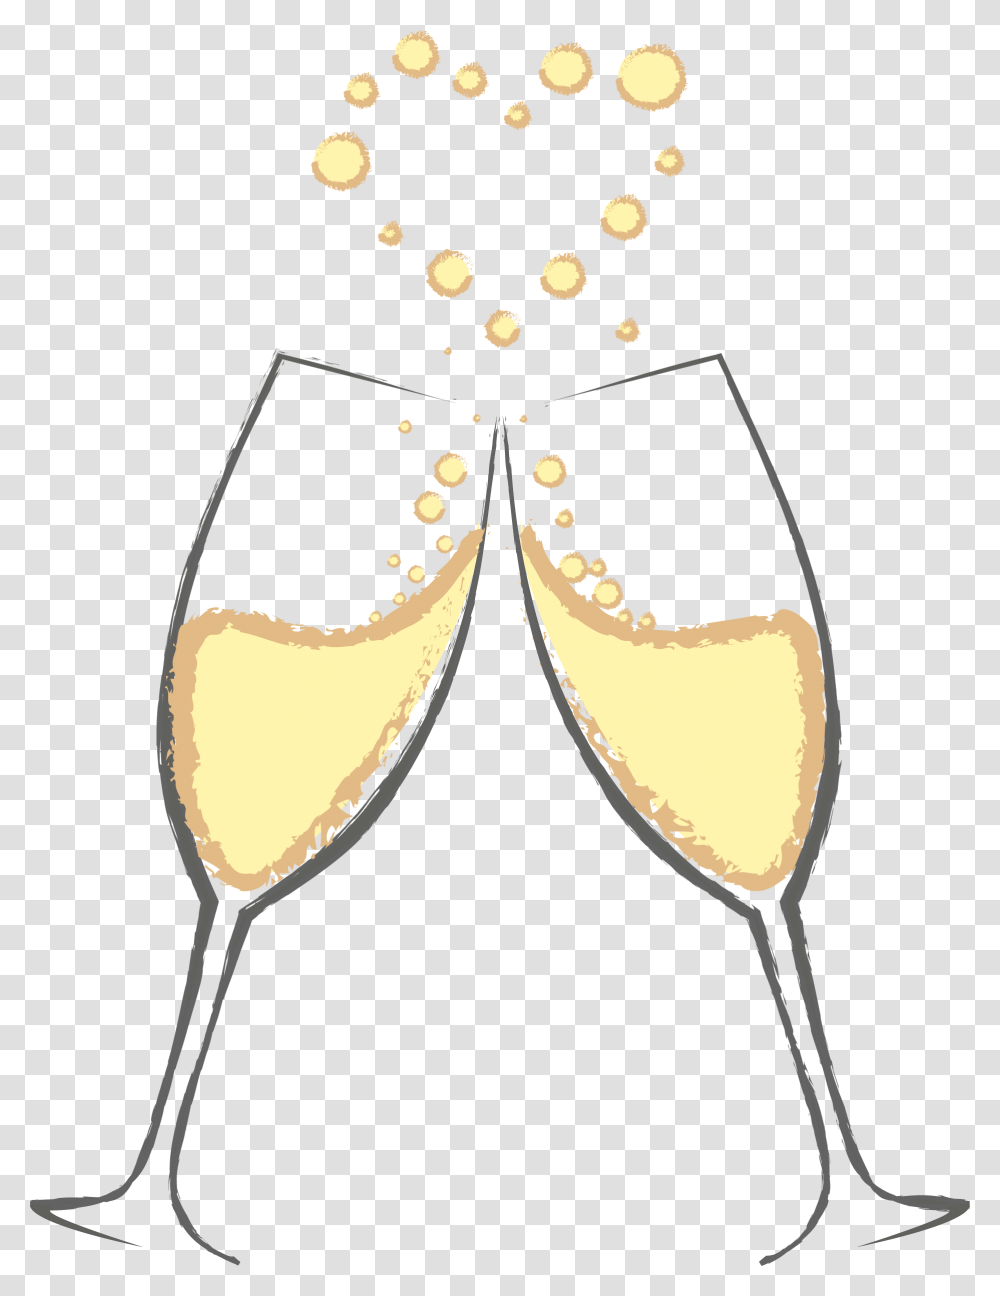 Clip Art Champagne Glasses Clip Art Free Clip Art Champagne Glasses, Wine Glass, Alcohol, Beverage, Drink Transparent Png